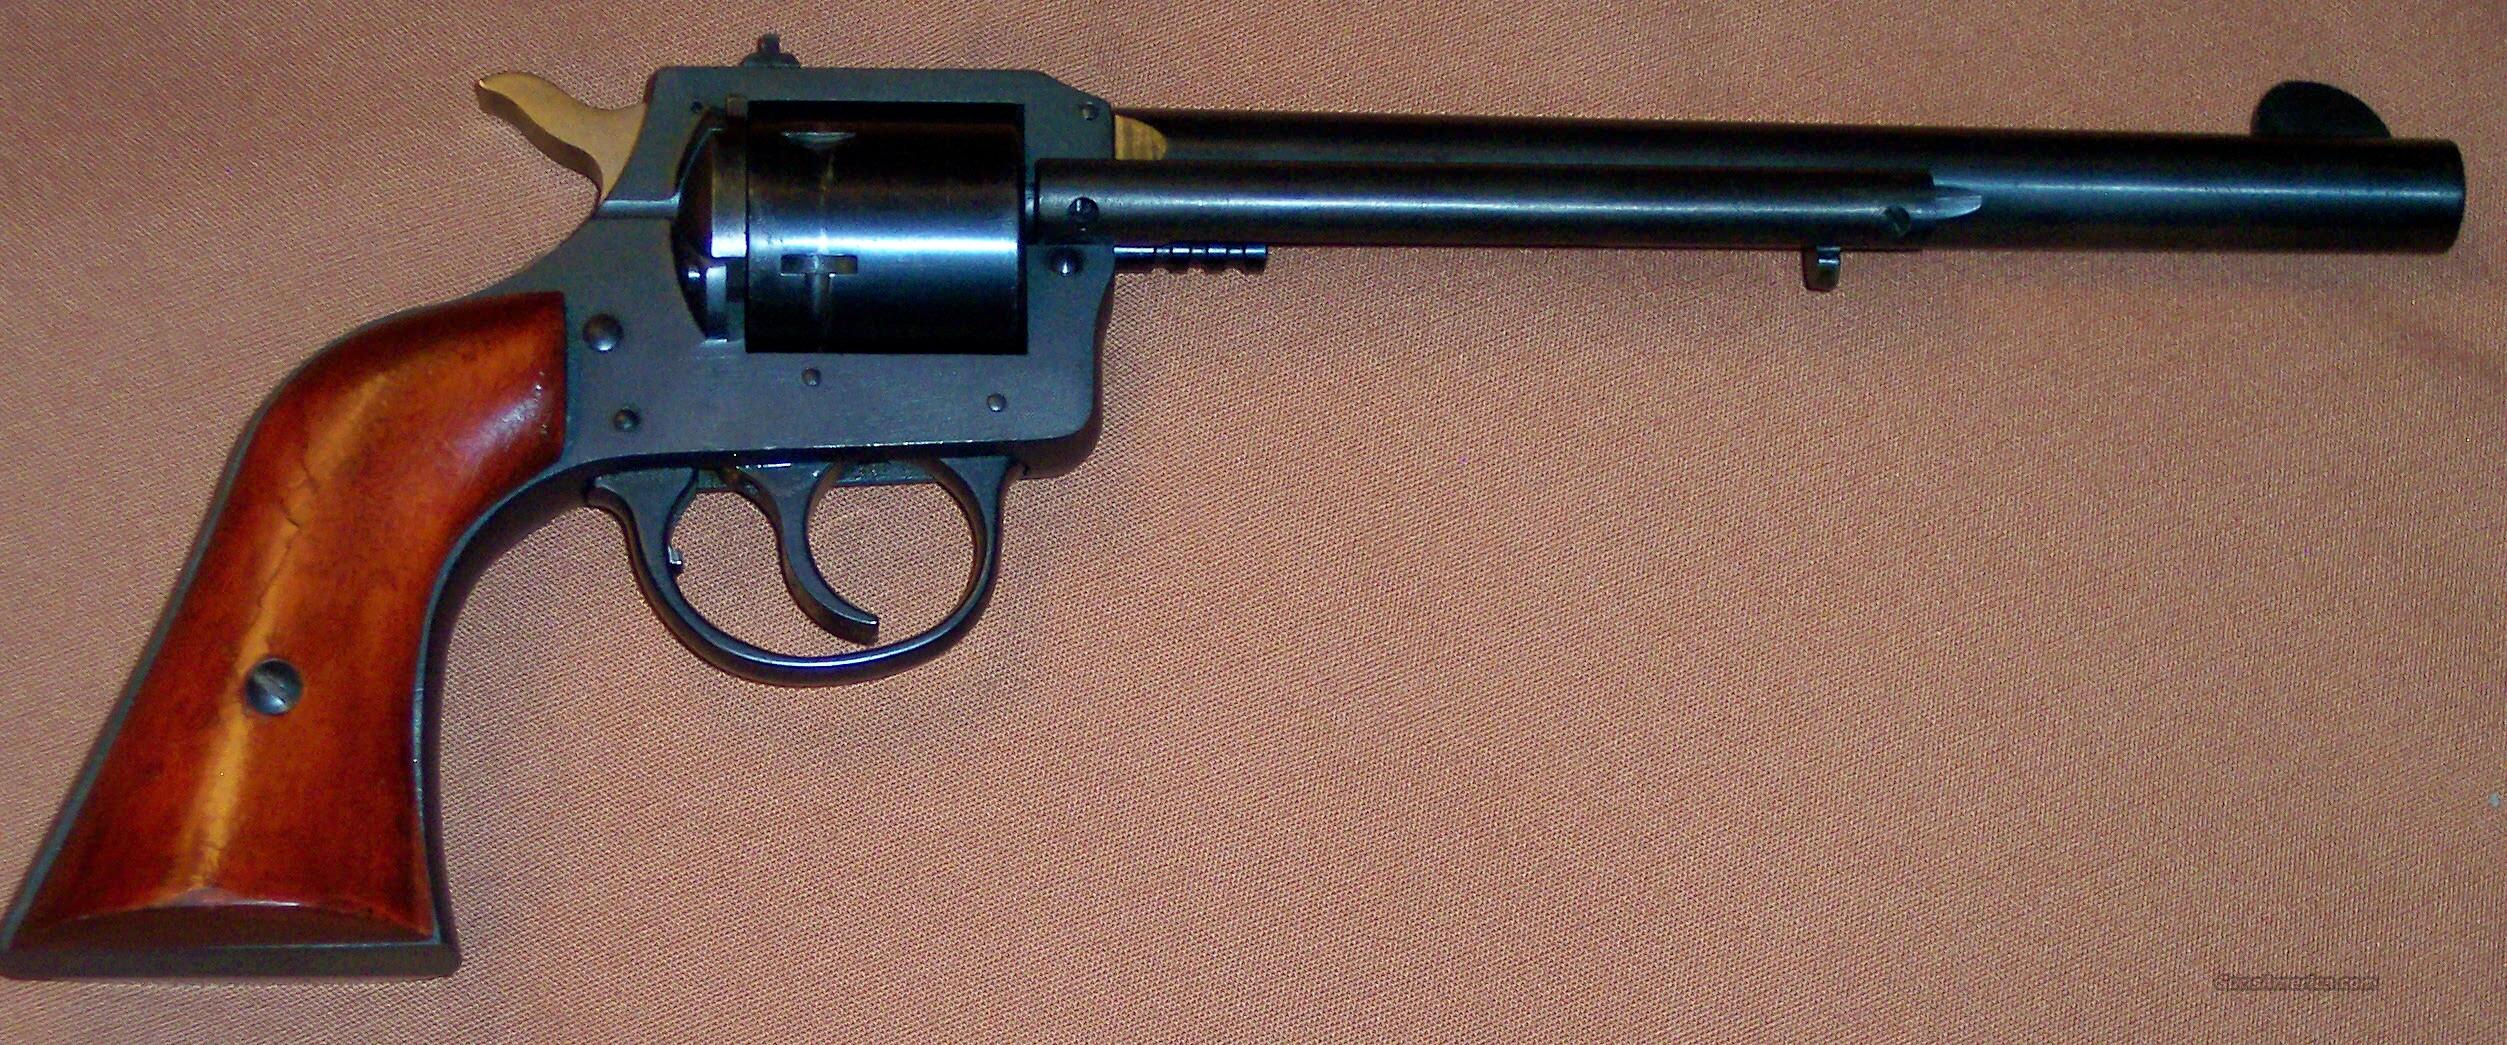 harrington and richardson revolver serial number lookup